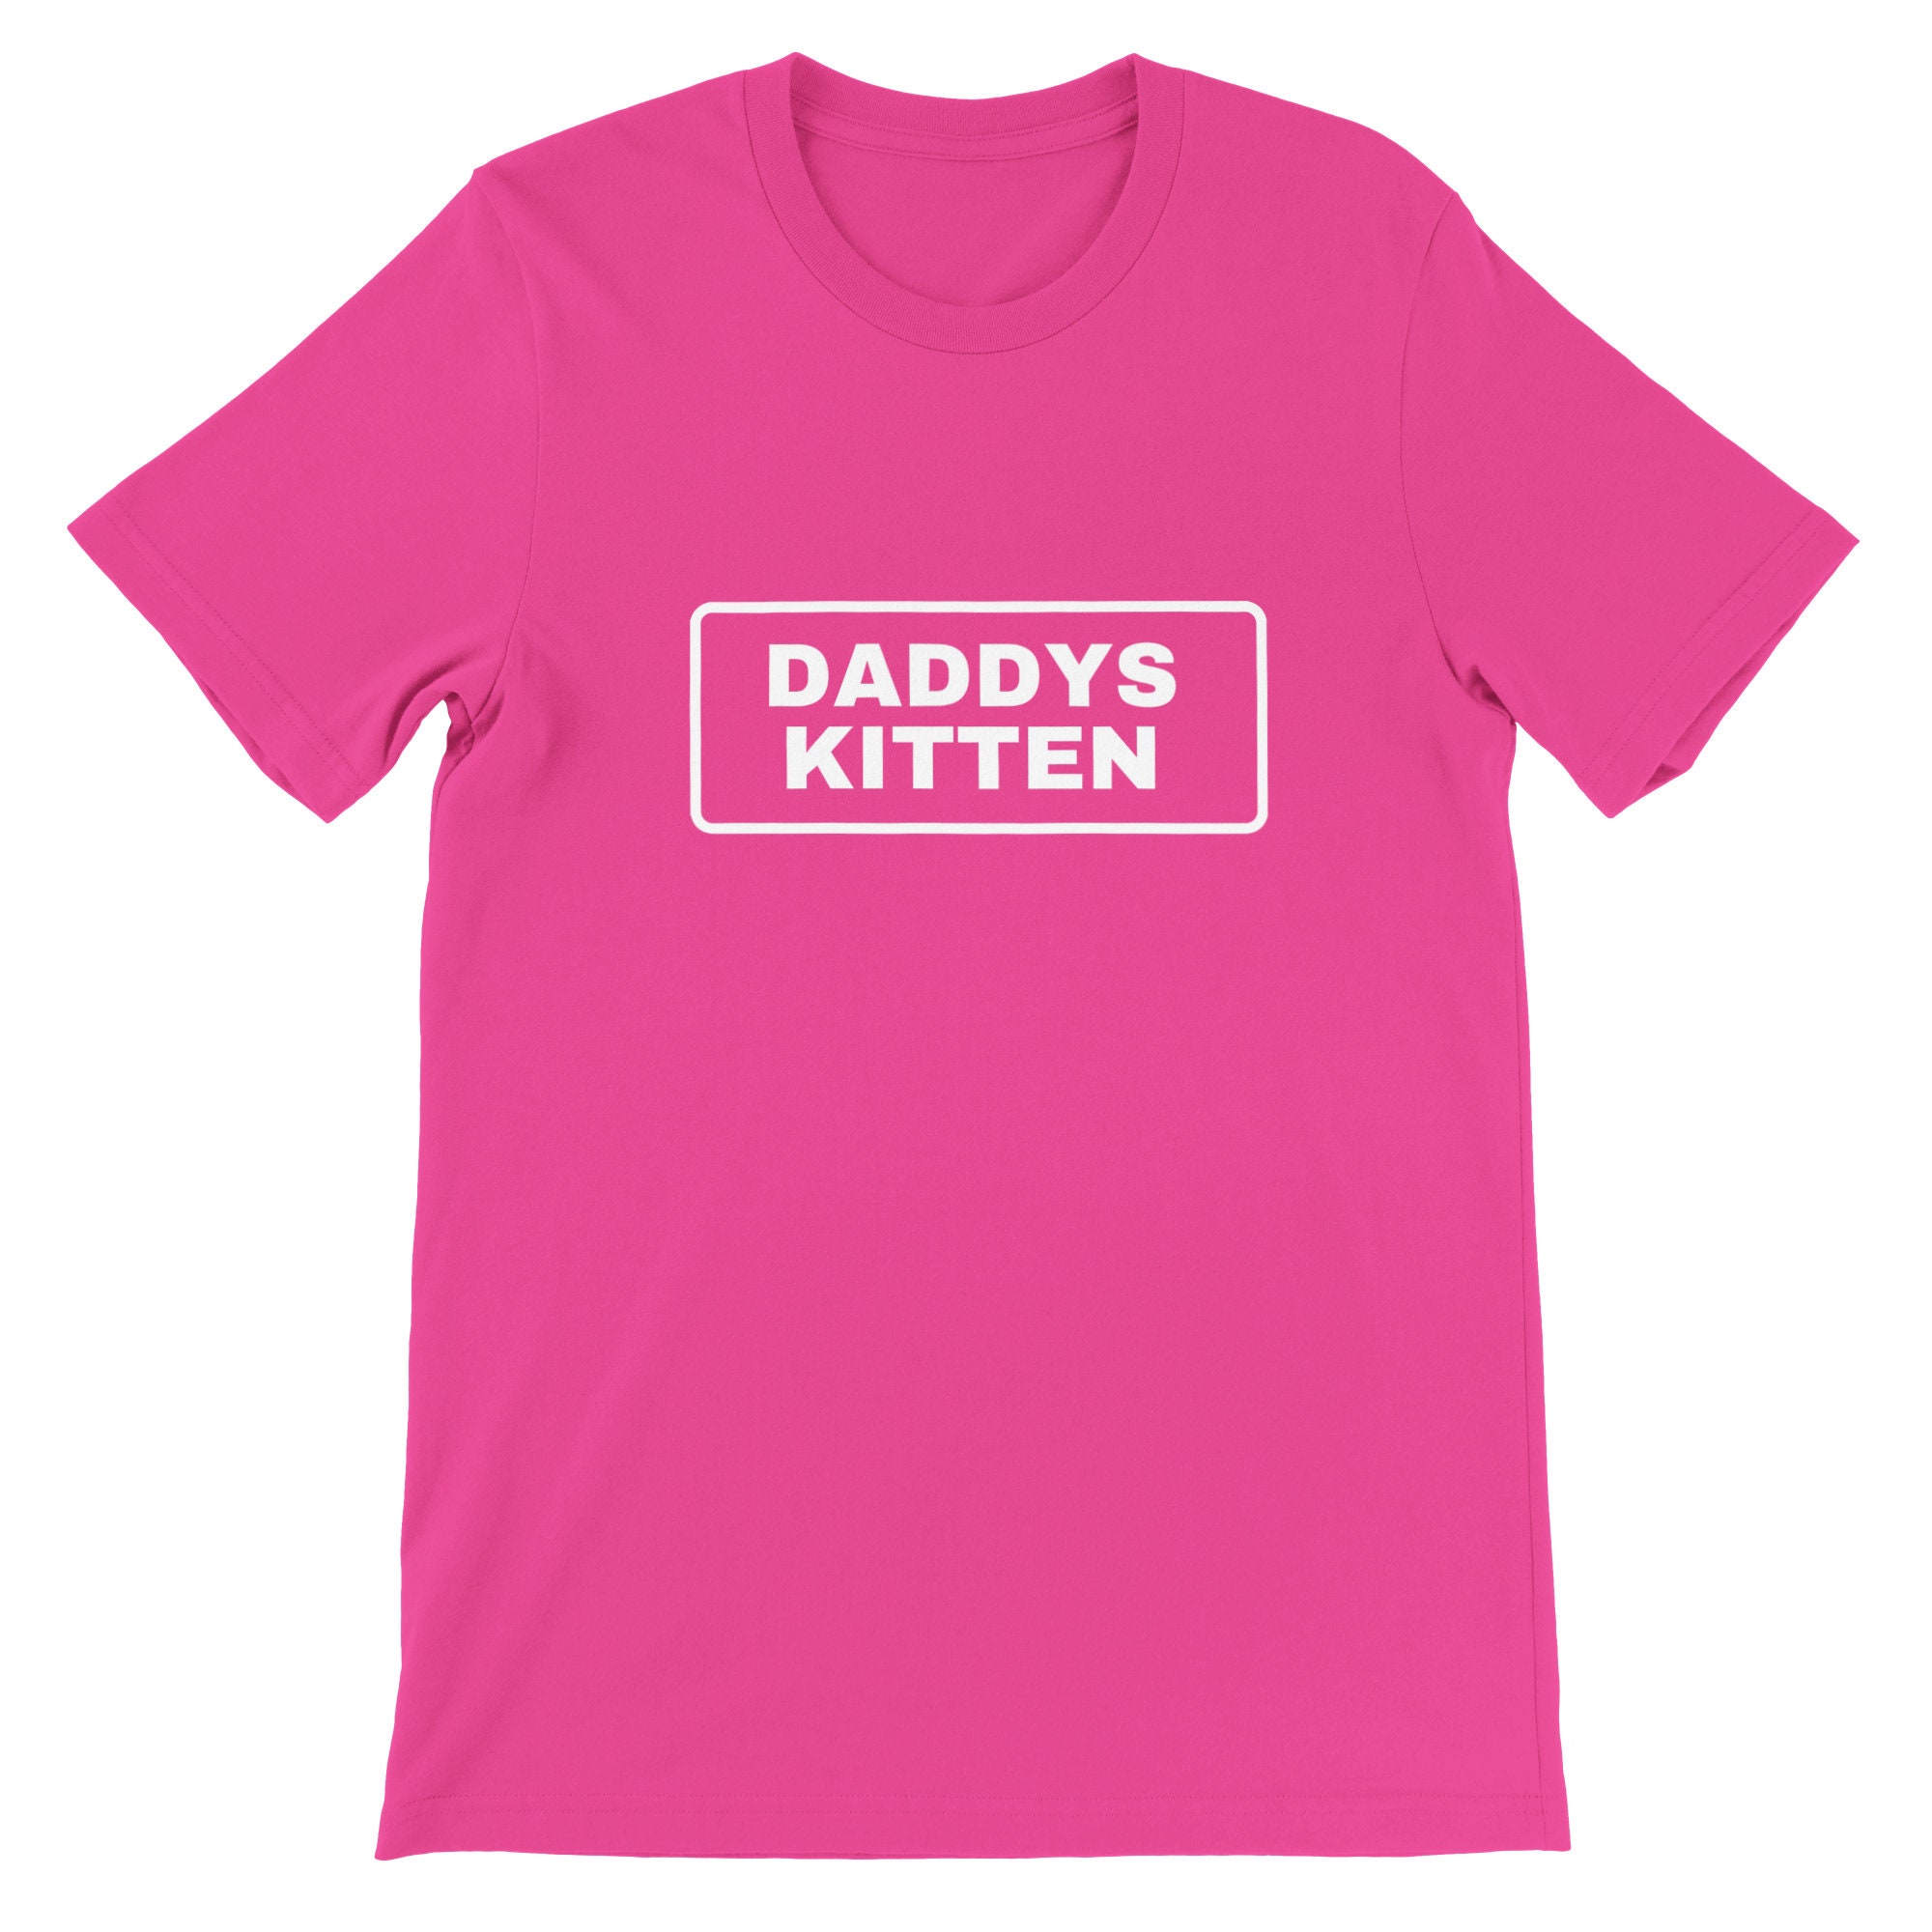 Daddys Kitten Triblend Camiseta Crewneck Femenino Etsy